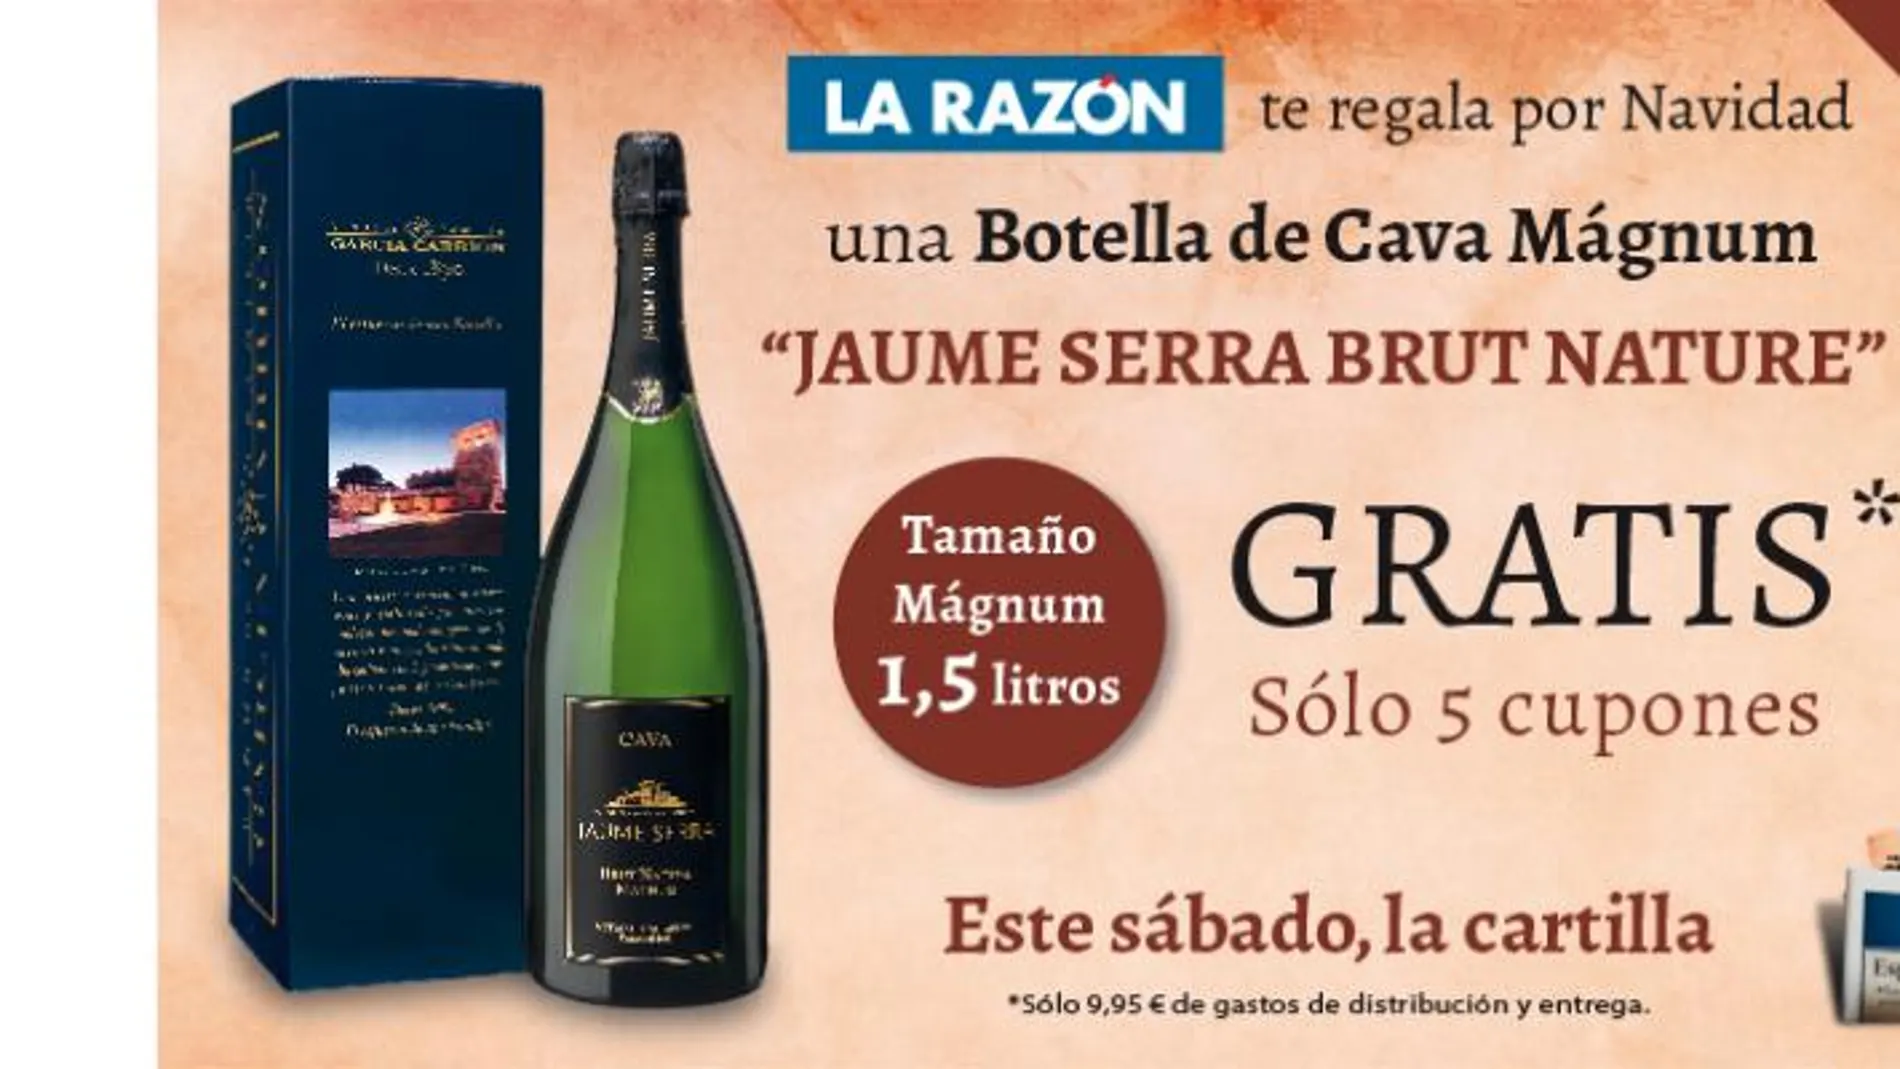 Caja de 3 botellas de Cava Mágnum “Jaume Serra Brut Nature”